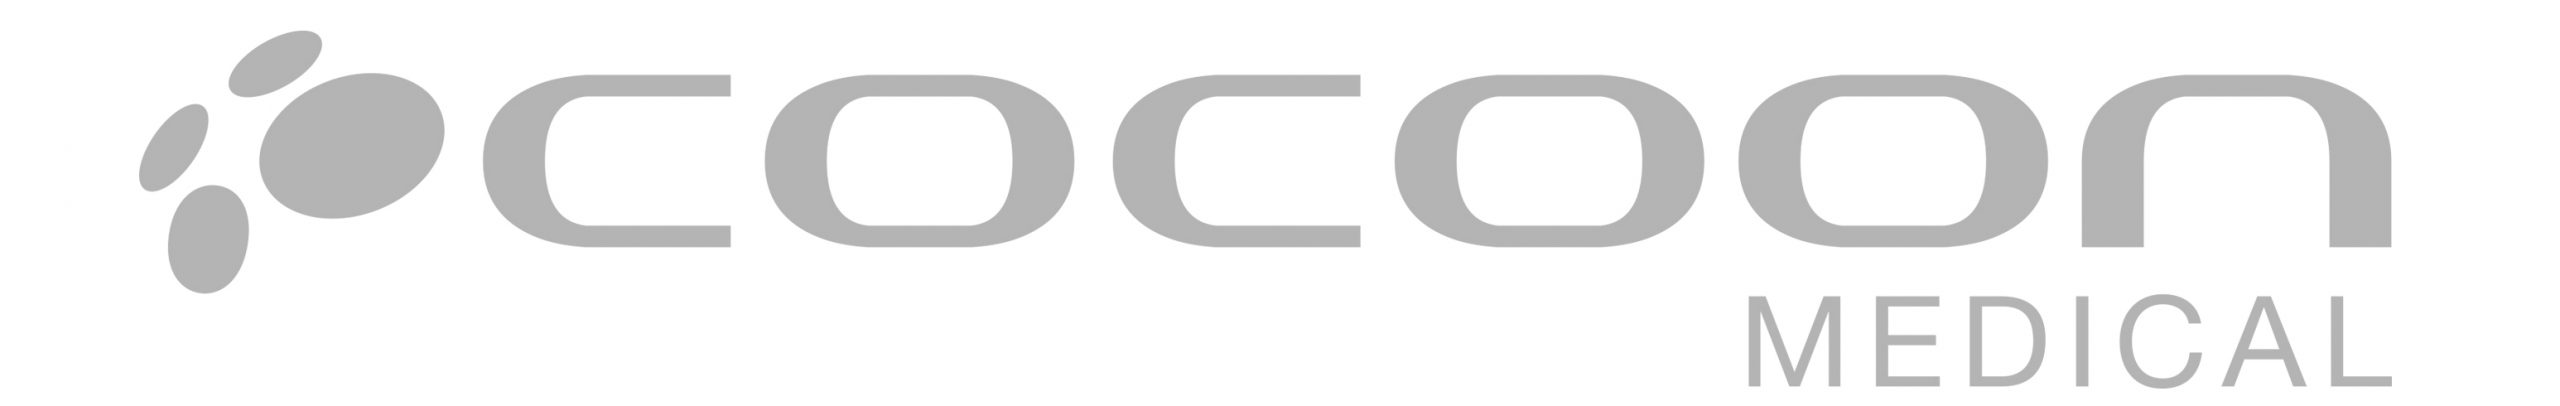 logo cocoon medical tecno21